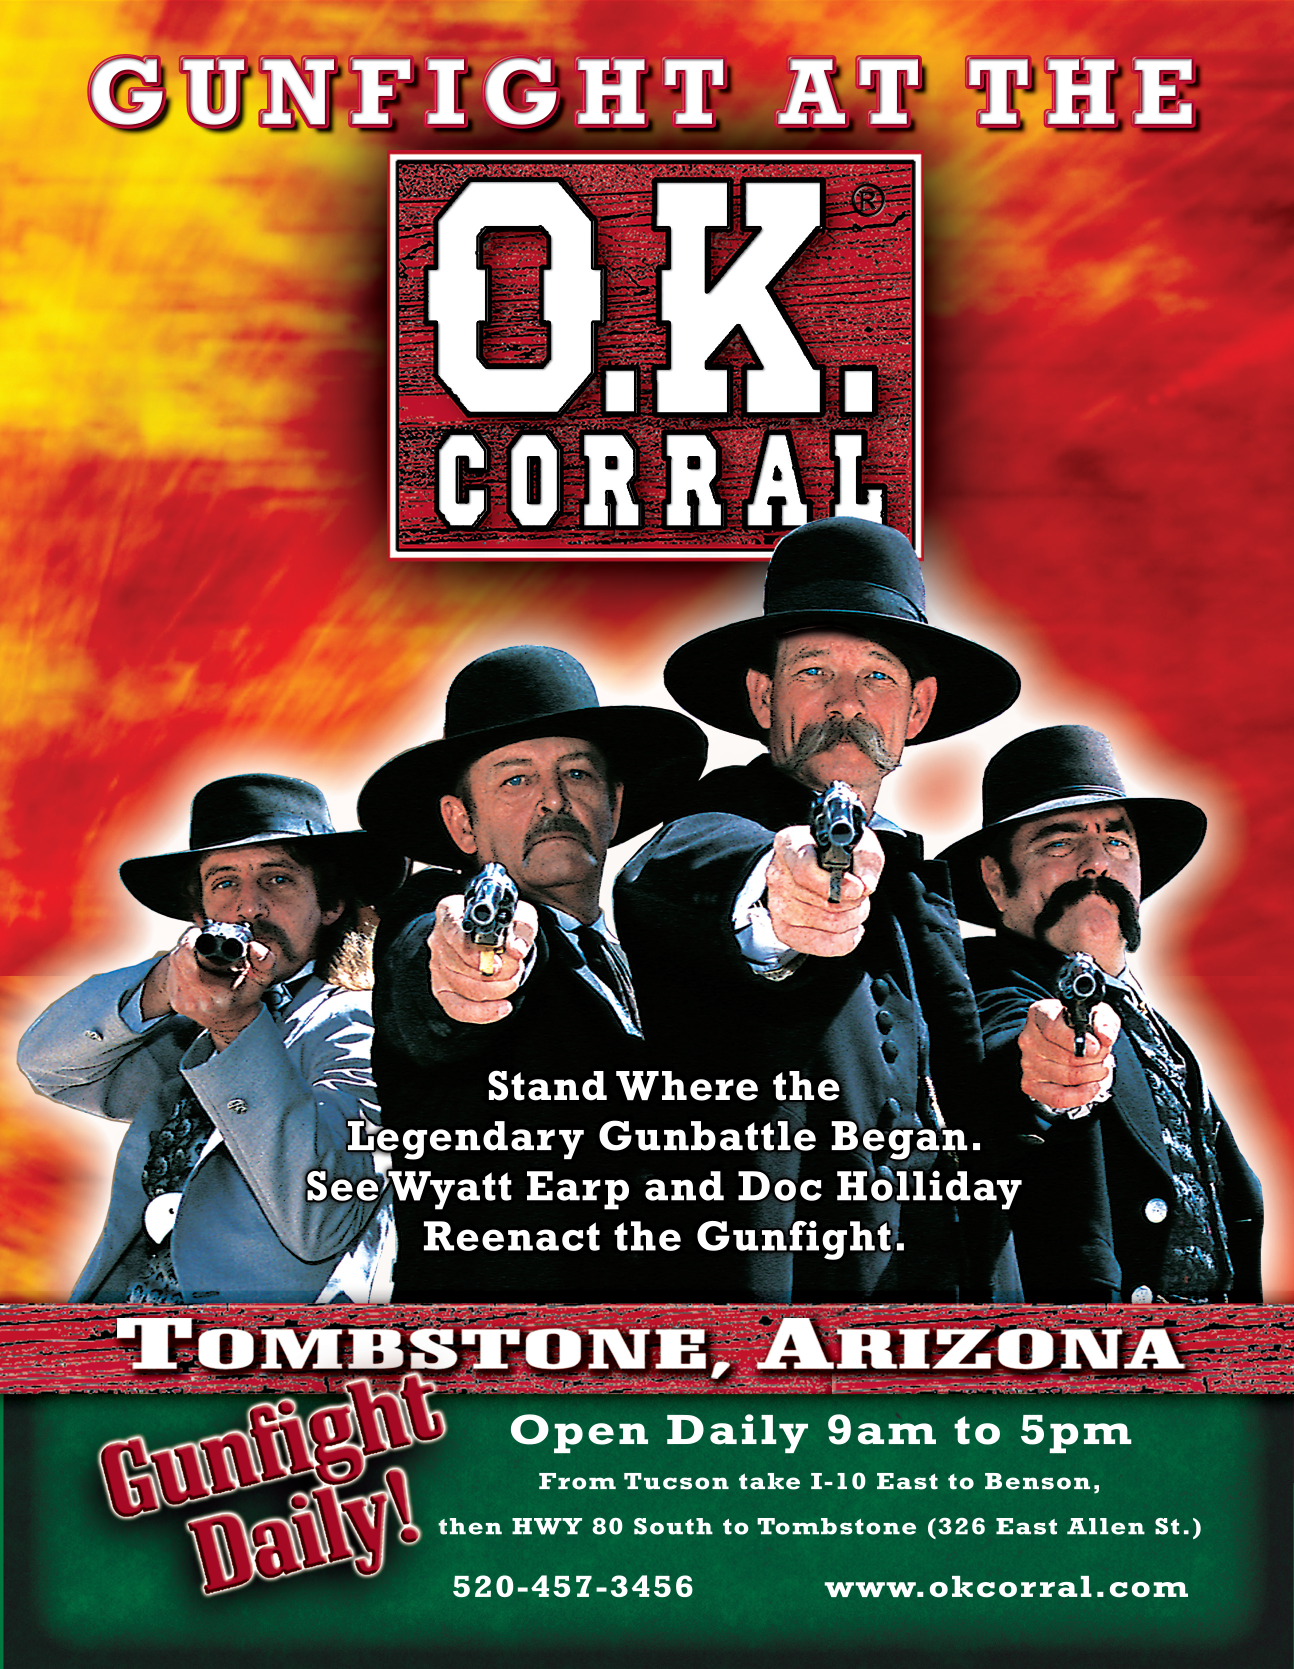 O.K. Corral – Famous Gunfight Site